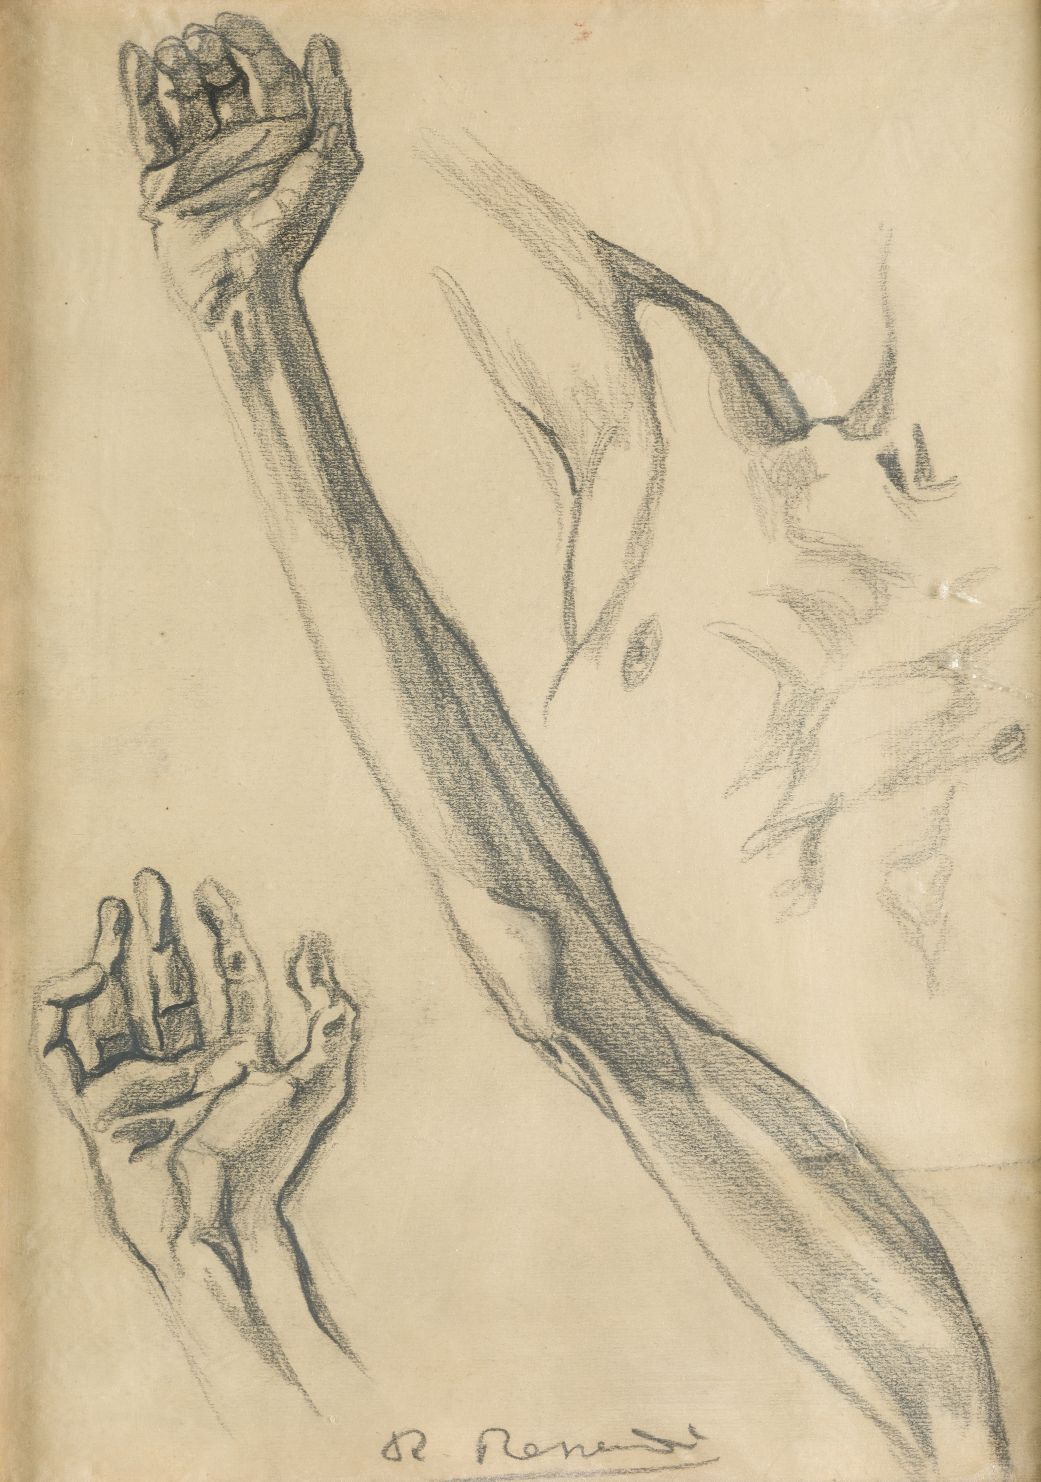 BALDOMERO ROMERO RESSENDI (1922 / 1977) "Sketches of the Crucifixion", 1961 都有签名&hellip;